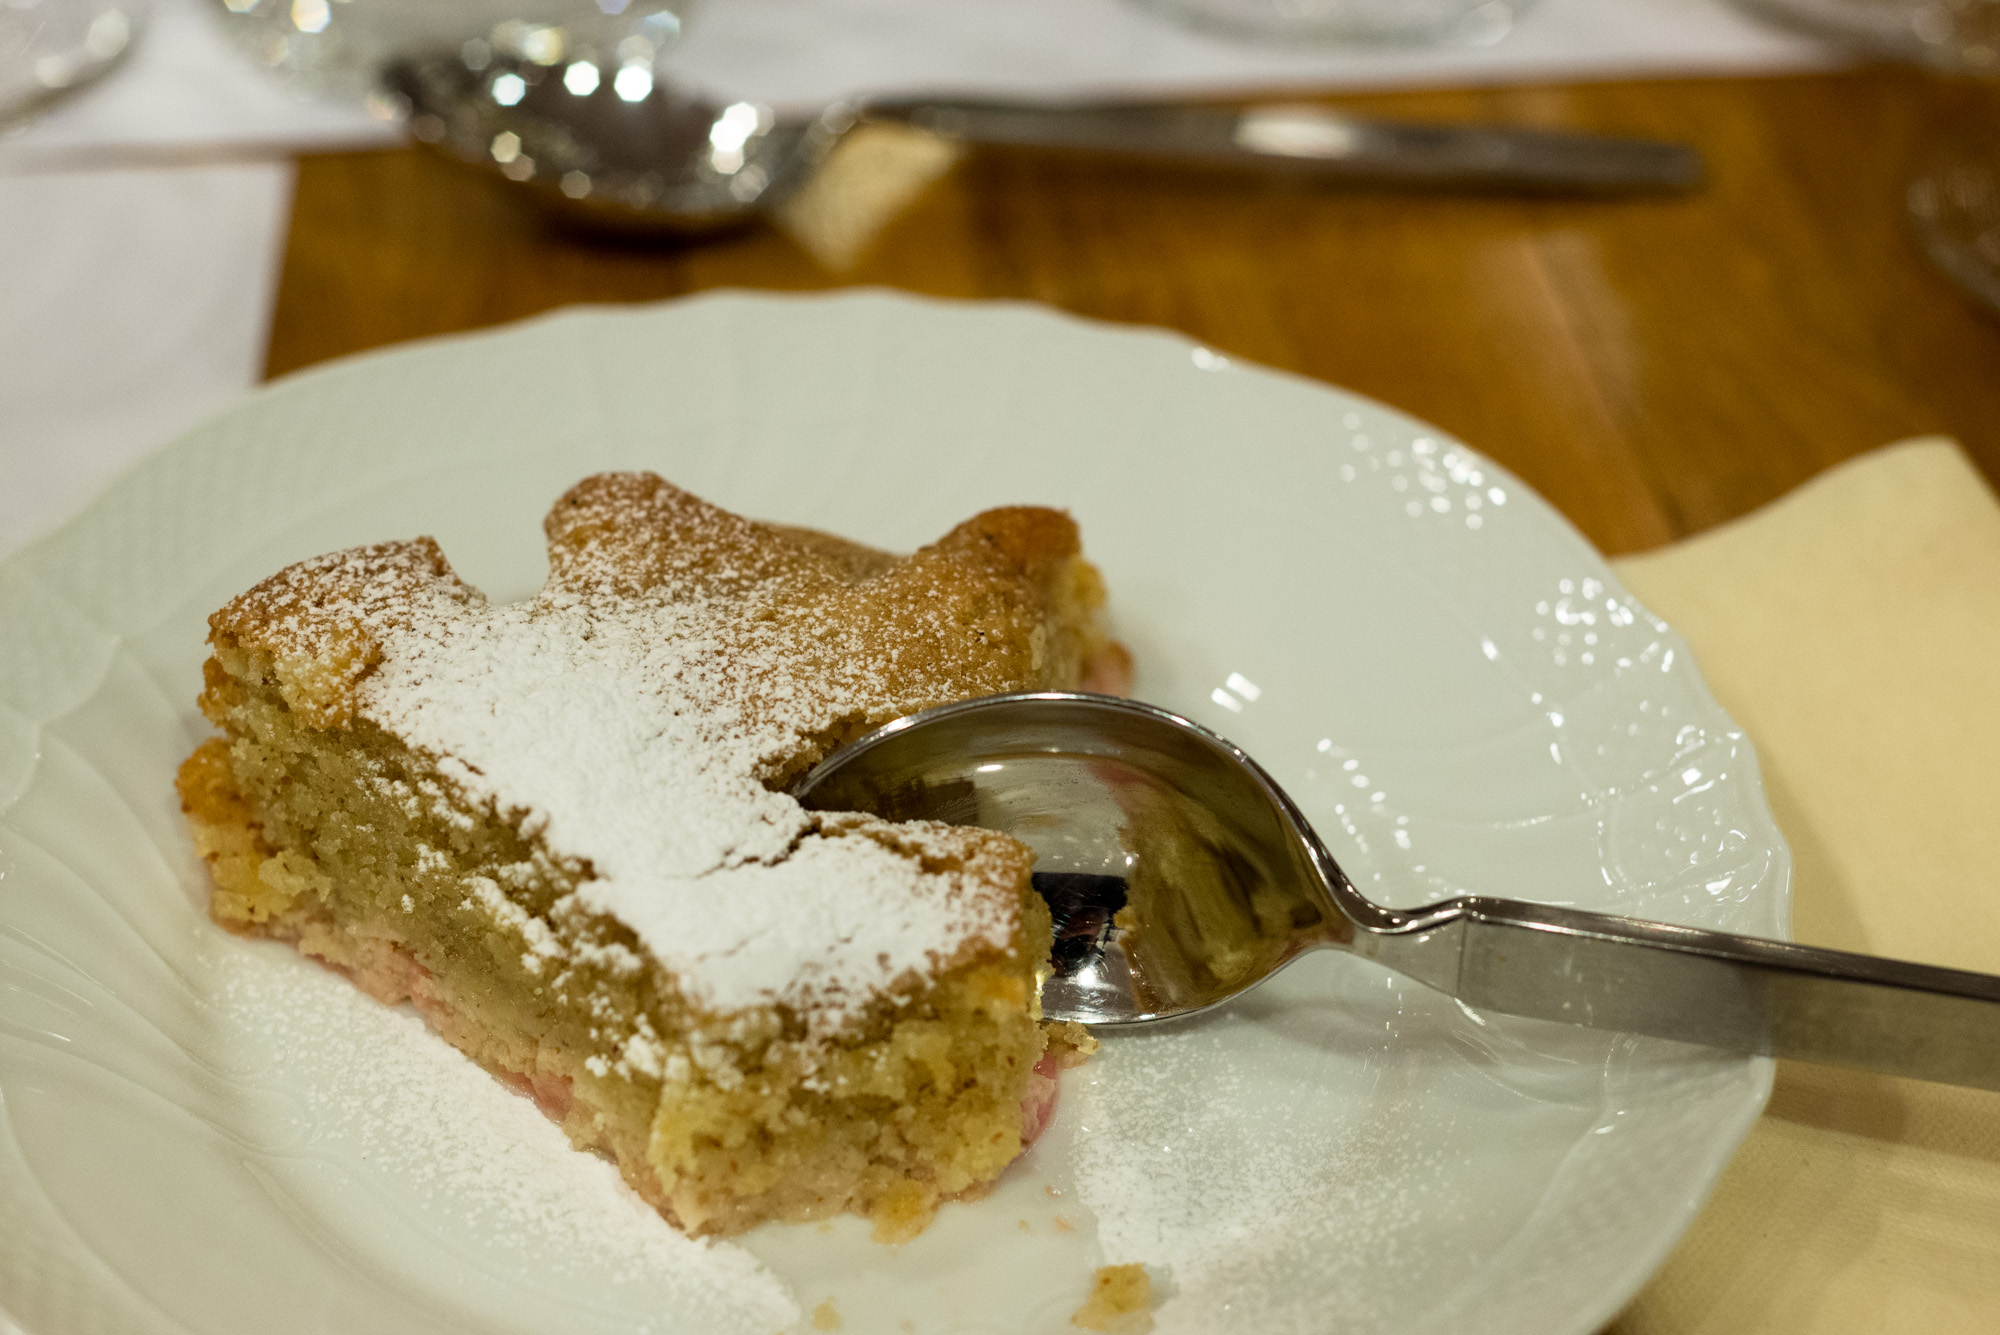 dessert heaven: rhubarb and almond torte